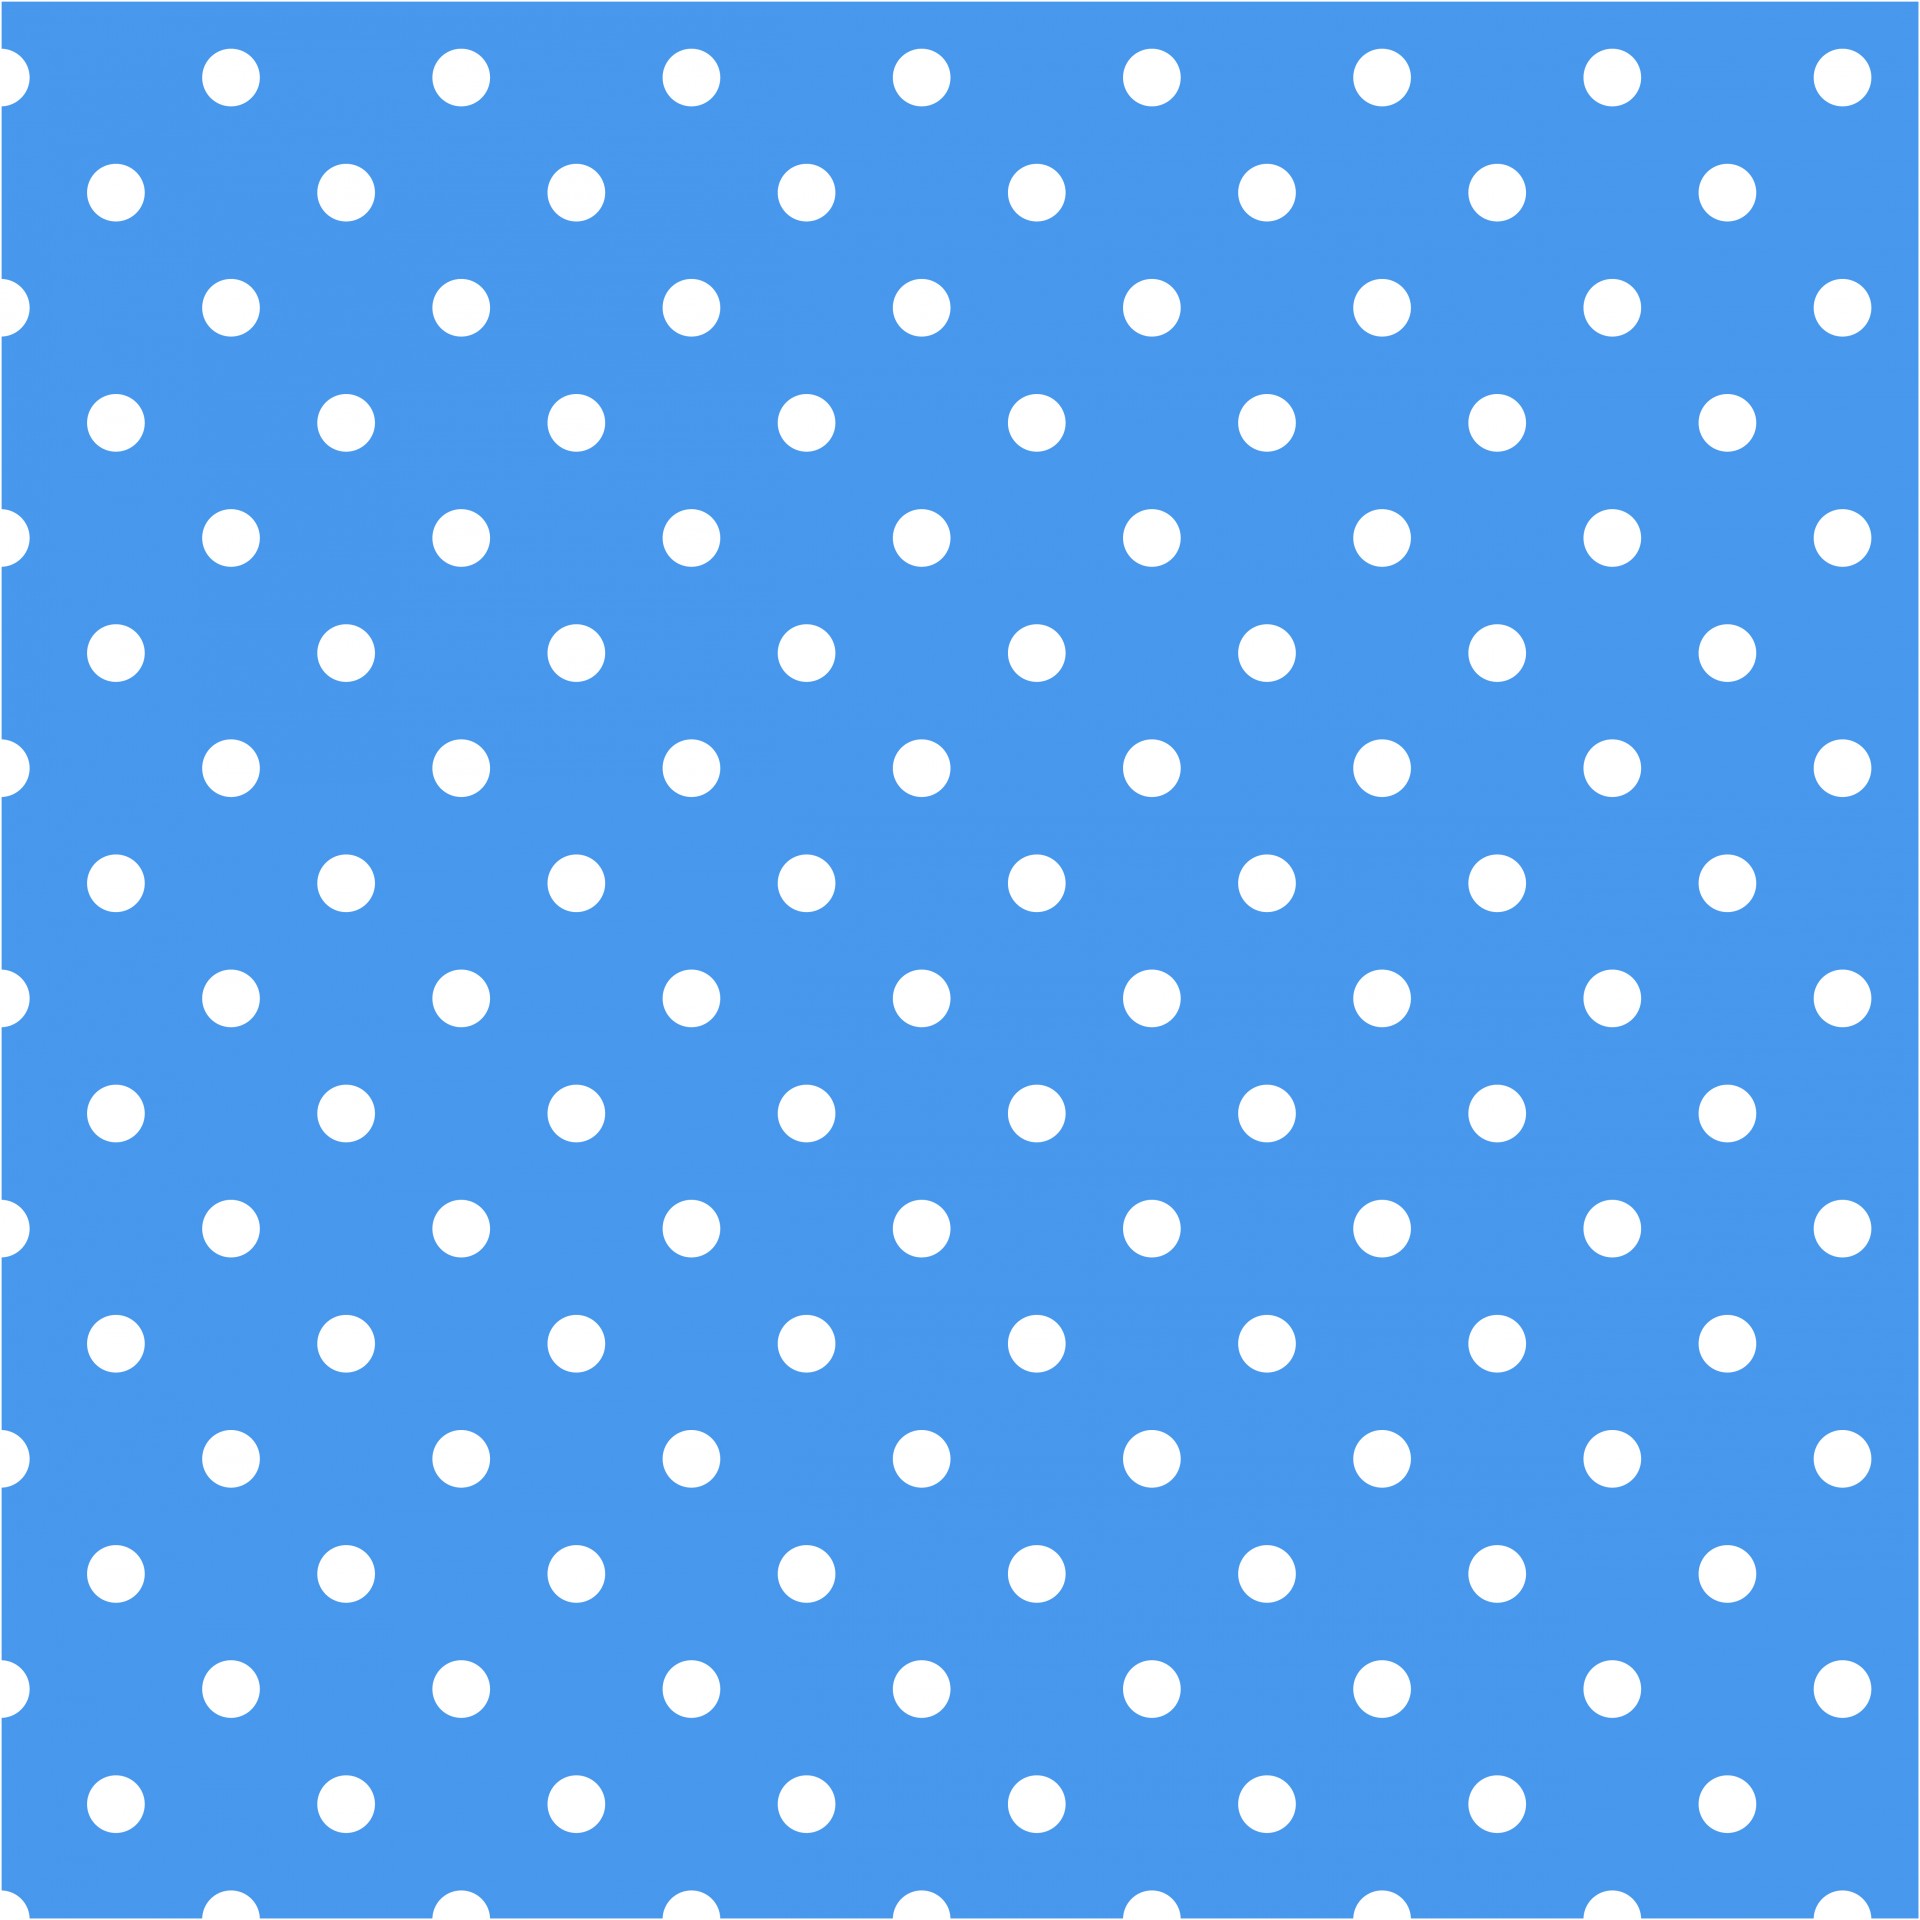 polka dots blue white free photo